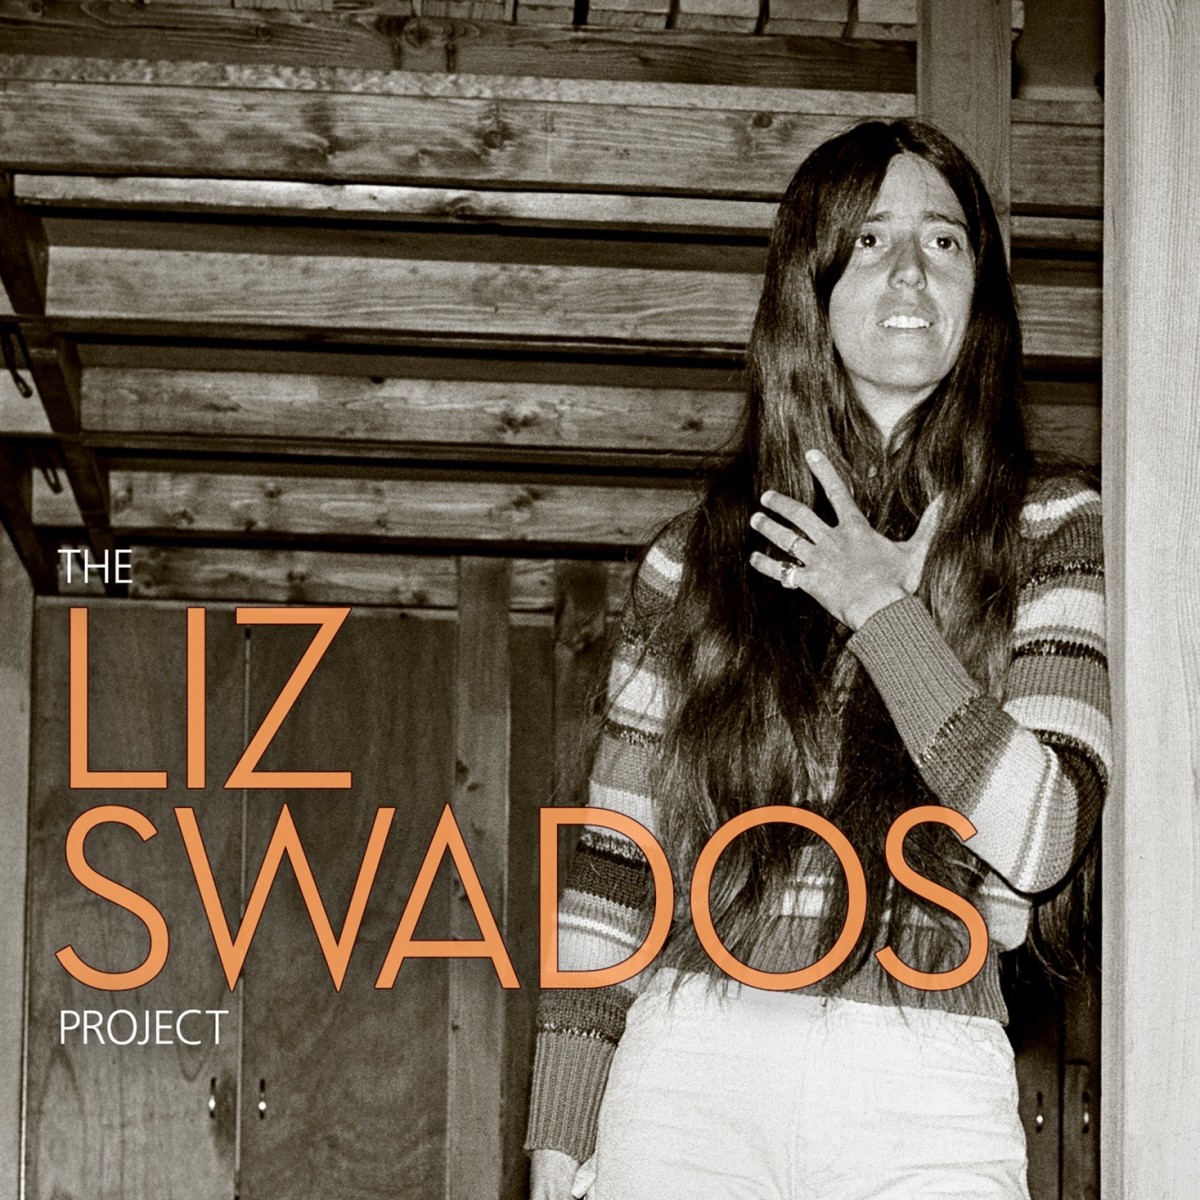 The Liz Swados Project Album